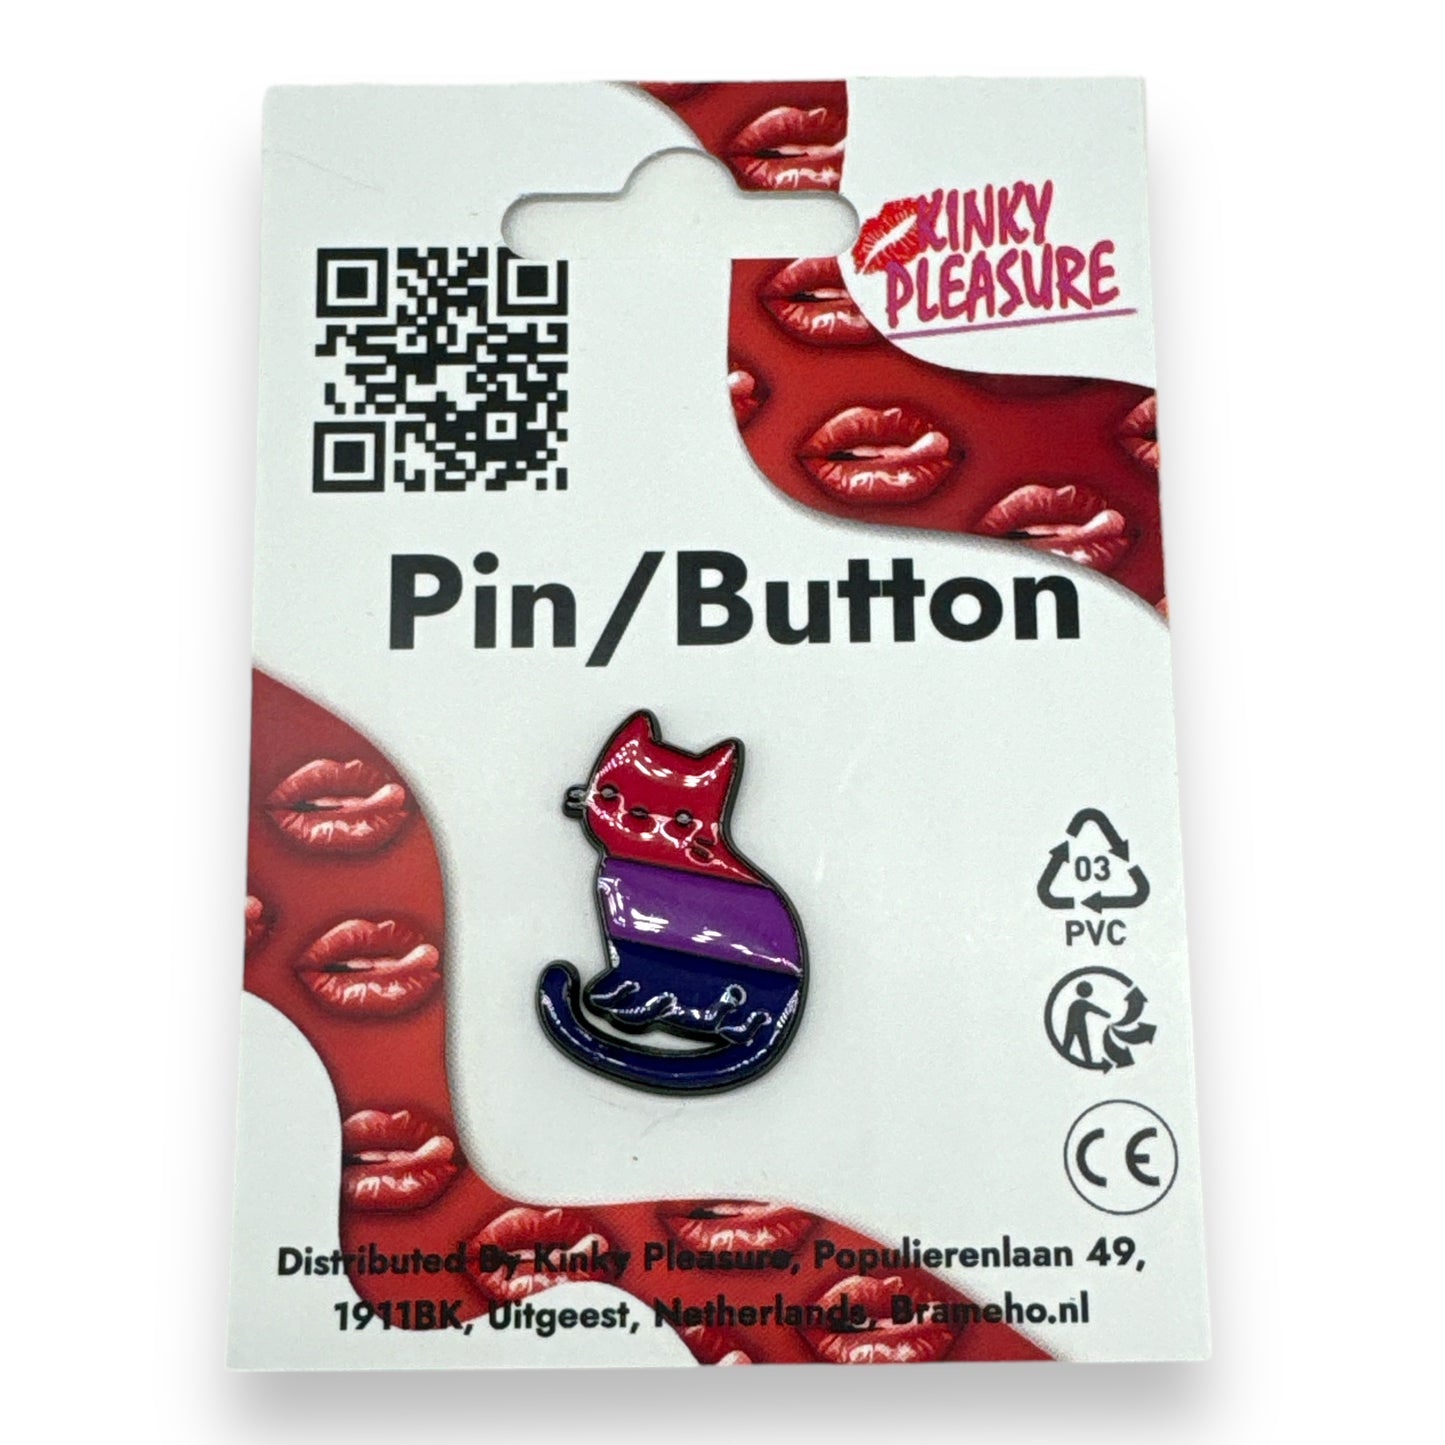 Kinky Pleasure - T057 - Pride Theme Badges Pin/Button - 4 Models